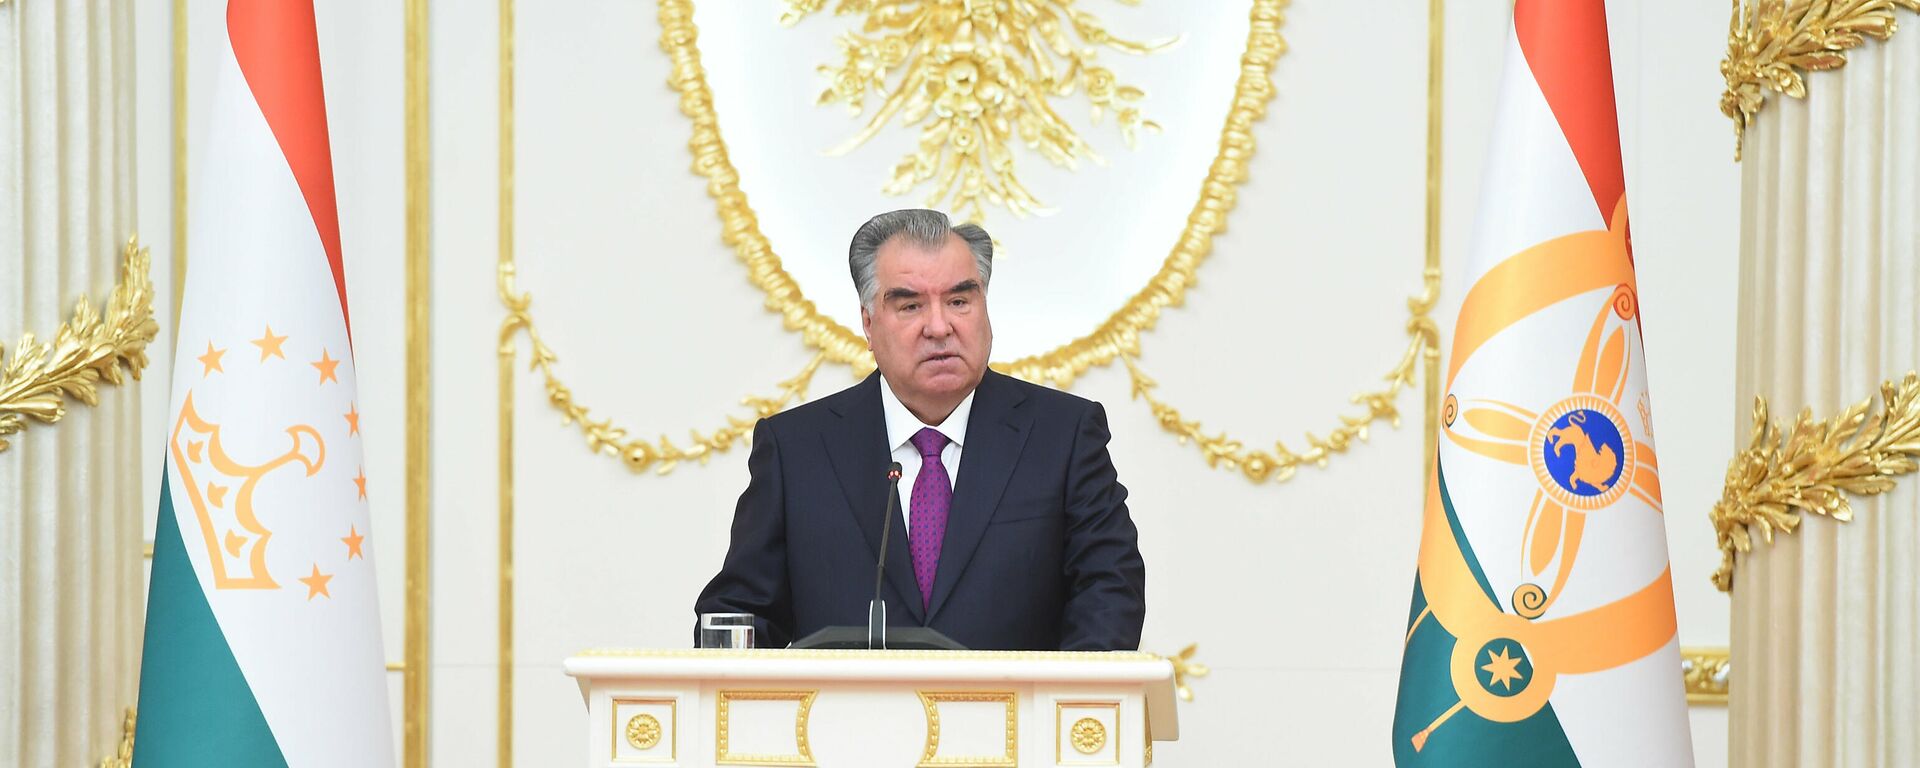 Президент Республики Таджикистан Эмомали Рахмон - Sputnik Тоҷикистон, 1920, 03.11.2021